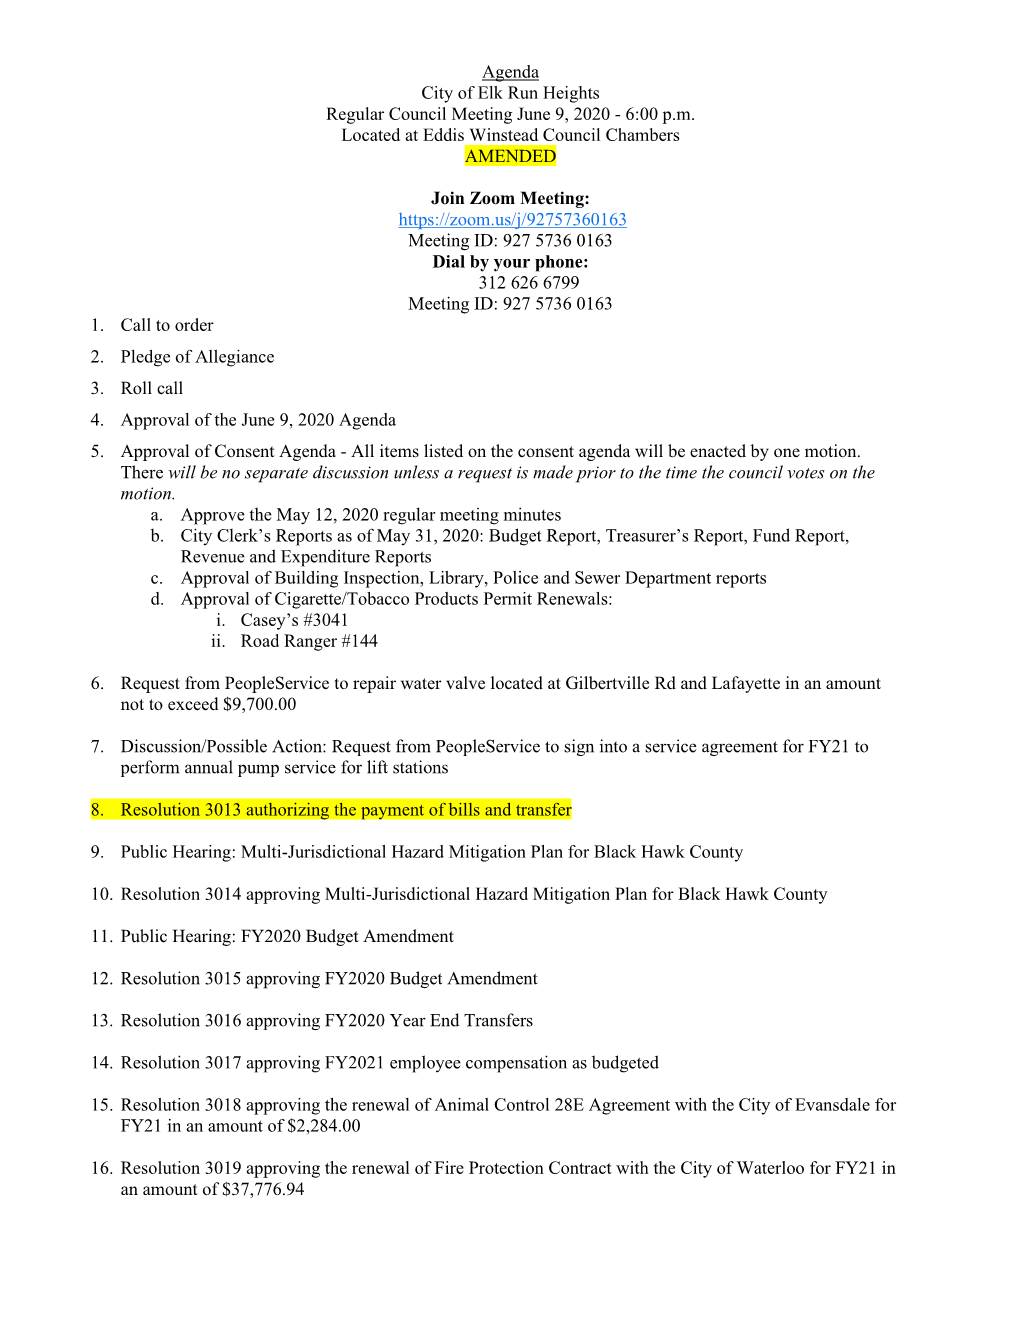 Agenda City of Elk Run Heights Regular Council Meeting June 9, 2020 - 6:00 P.M